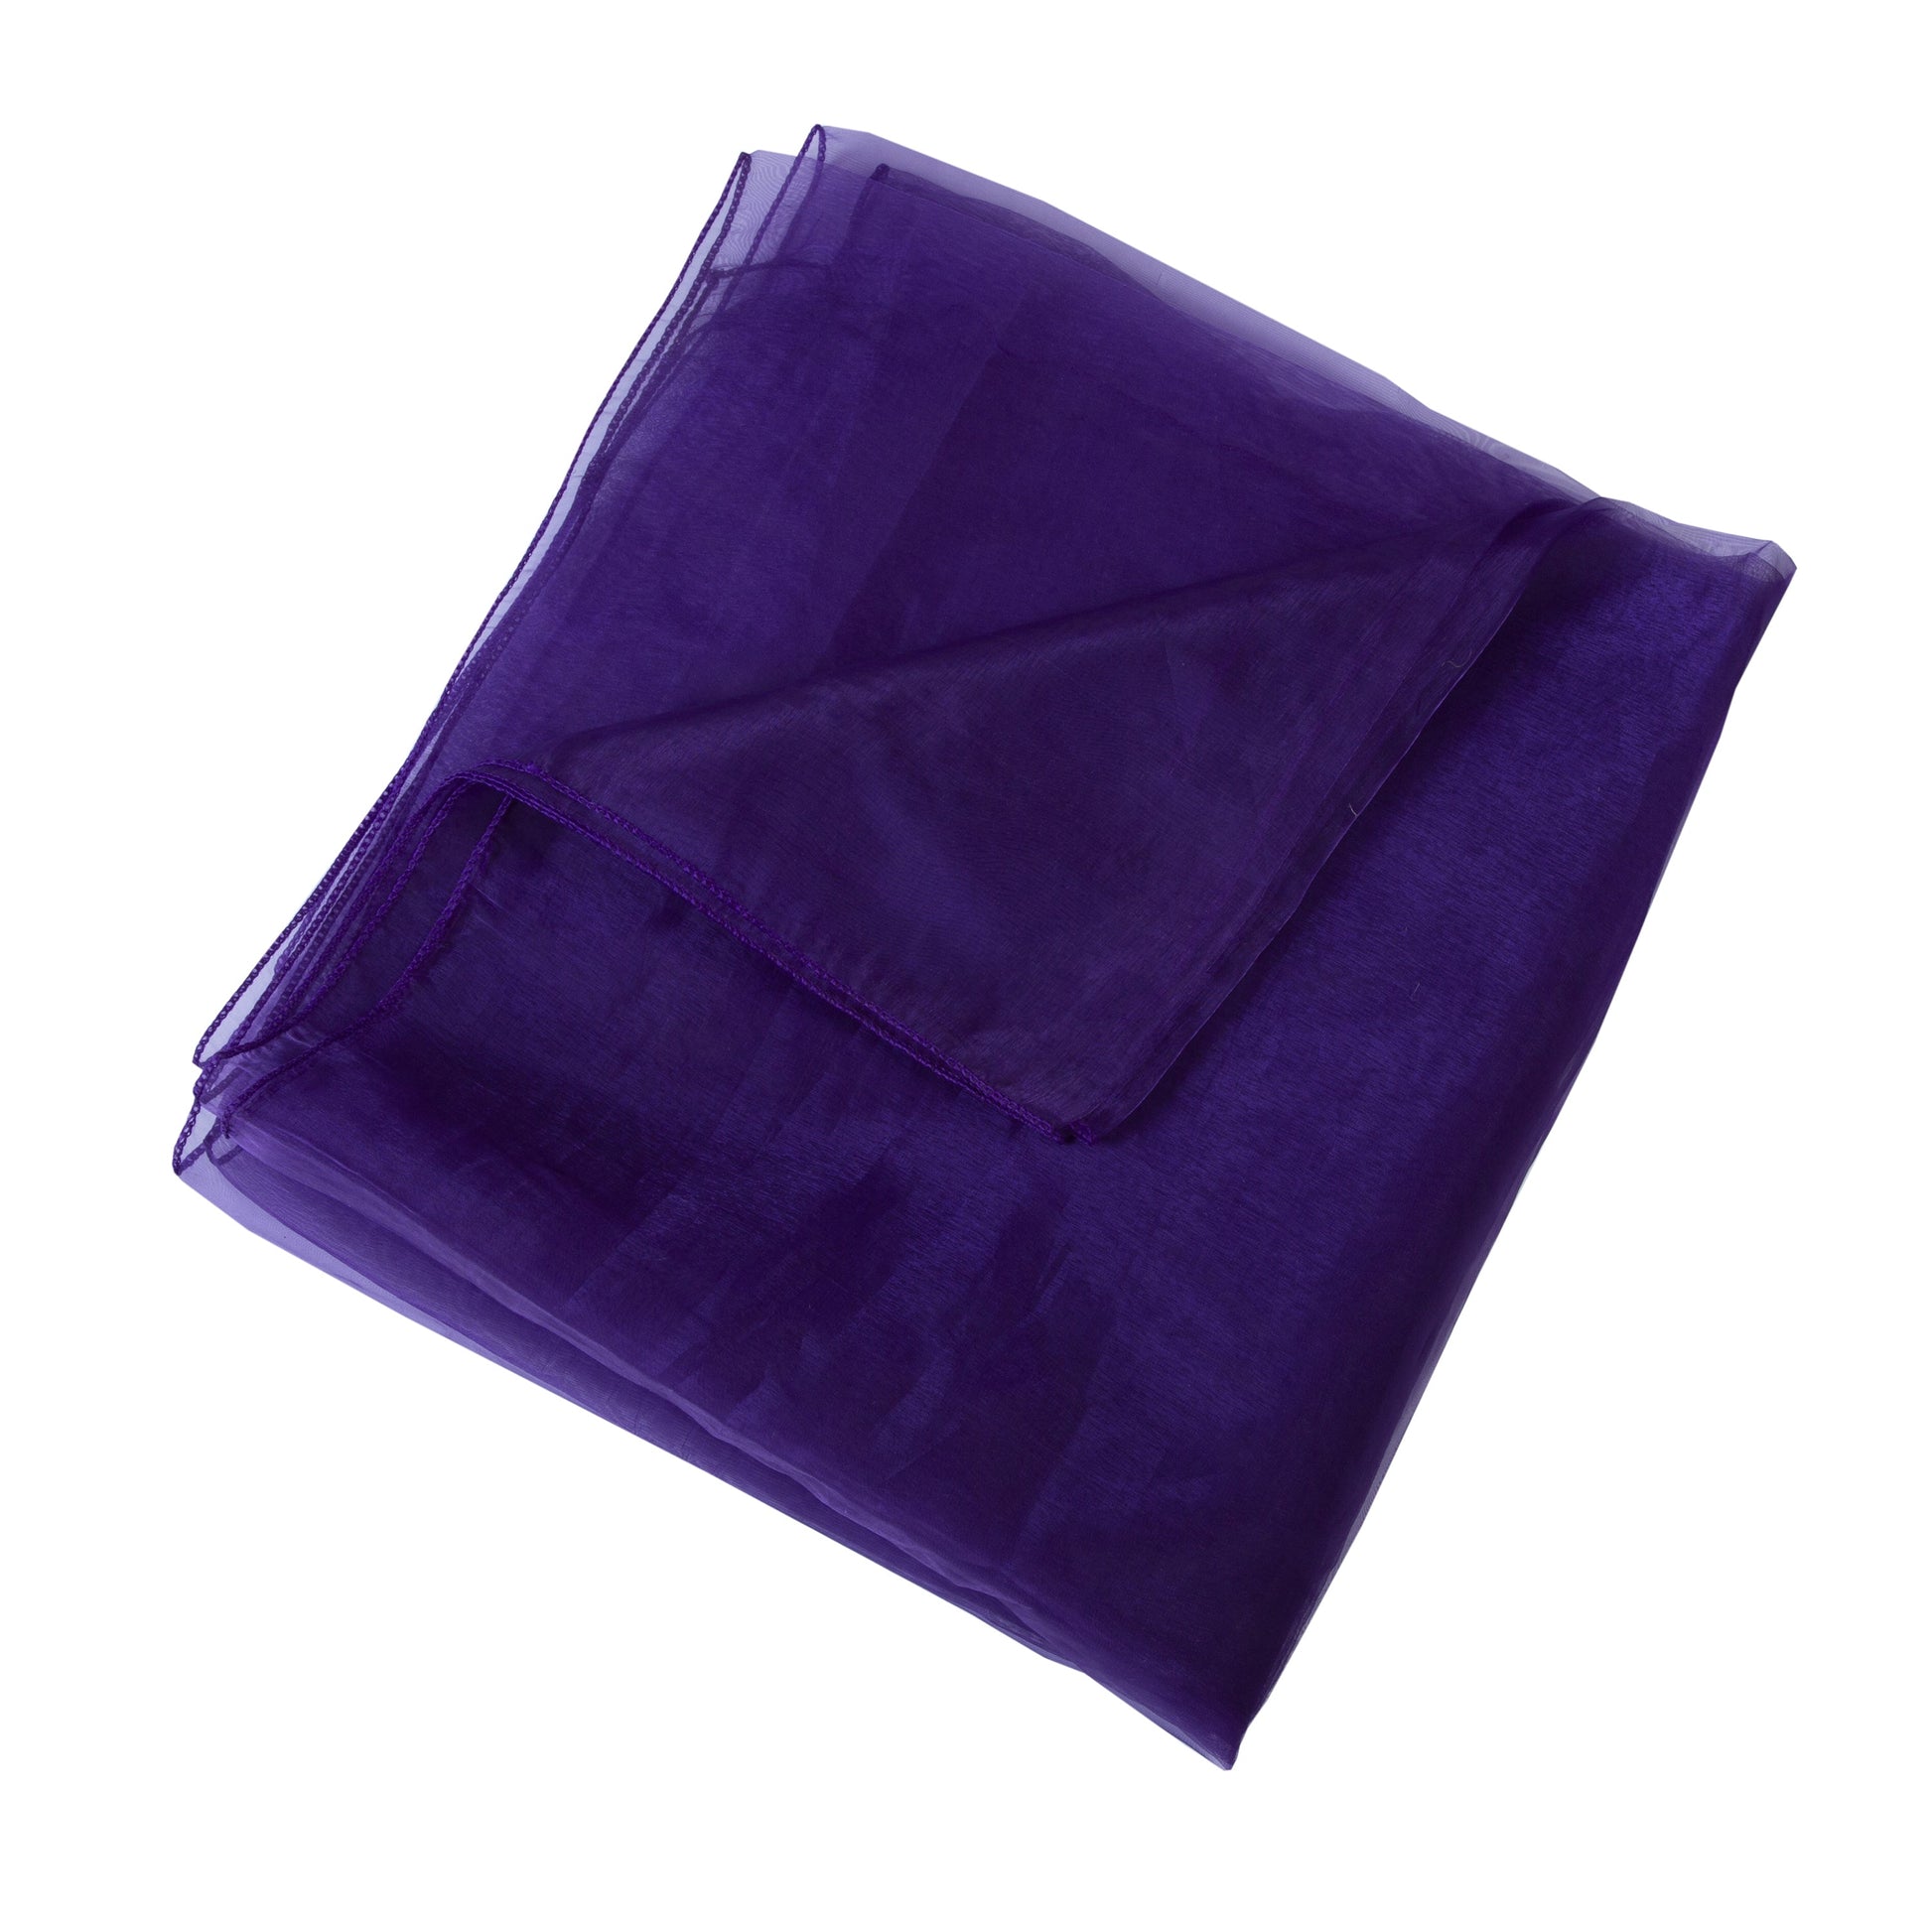 Cadbury Purple,2459a35c-9f6e-48aa-abcf-bd21268ed998